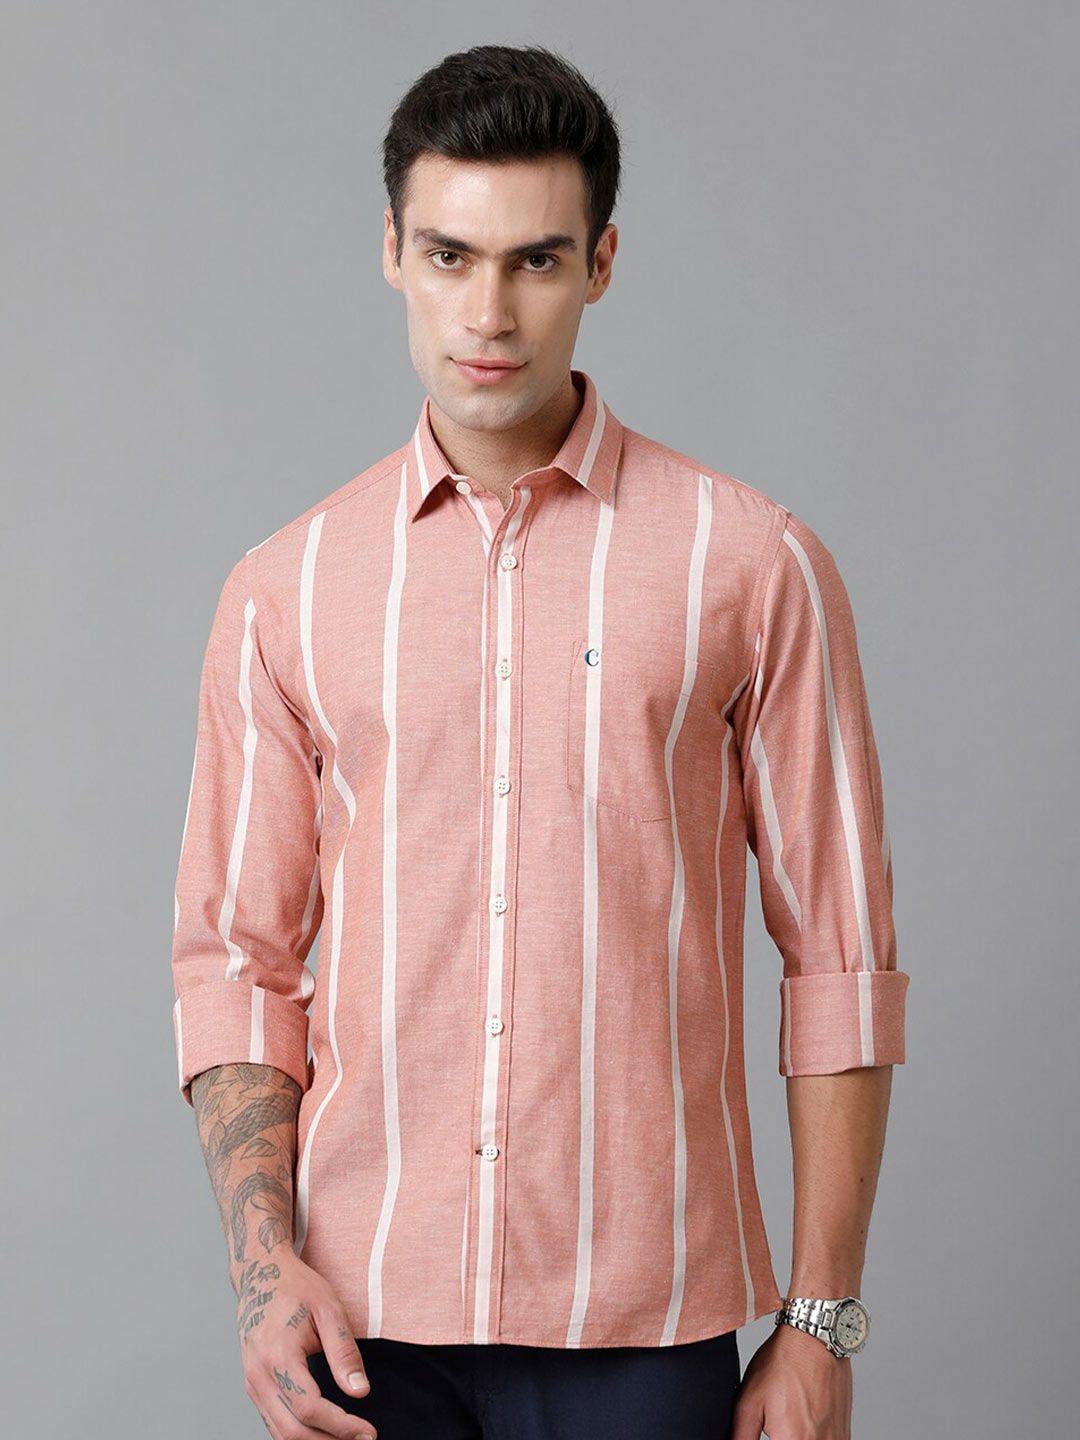 cavallo by linen club contemporary slim fit vertical stripes cotton linen casual shirt